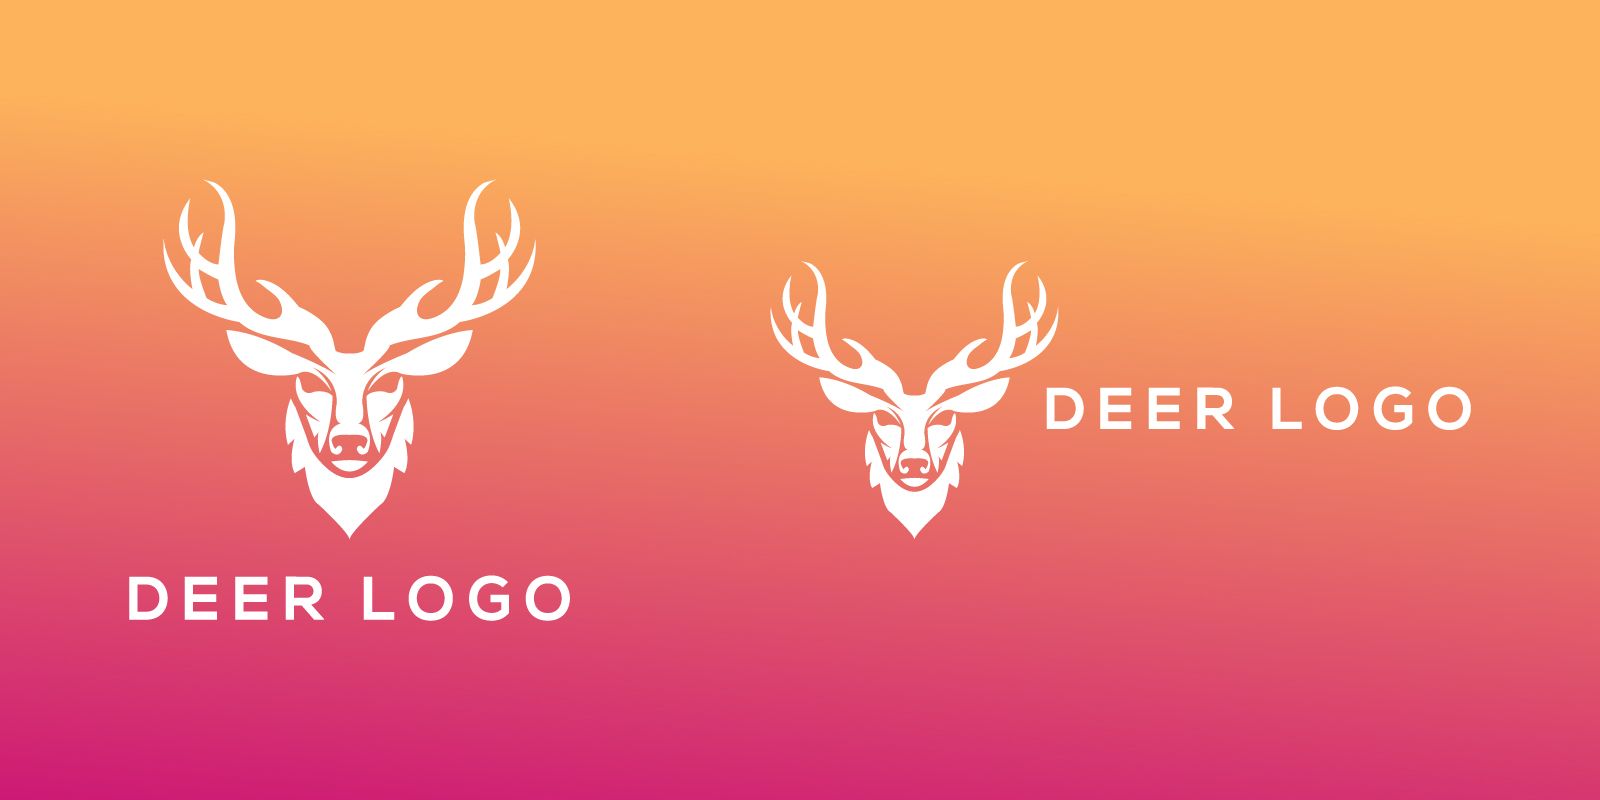 Create an image of a the Milwaukee bucks logo